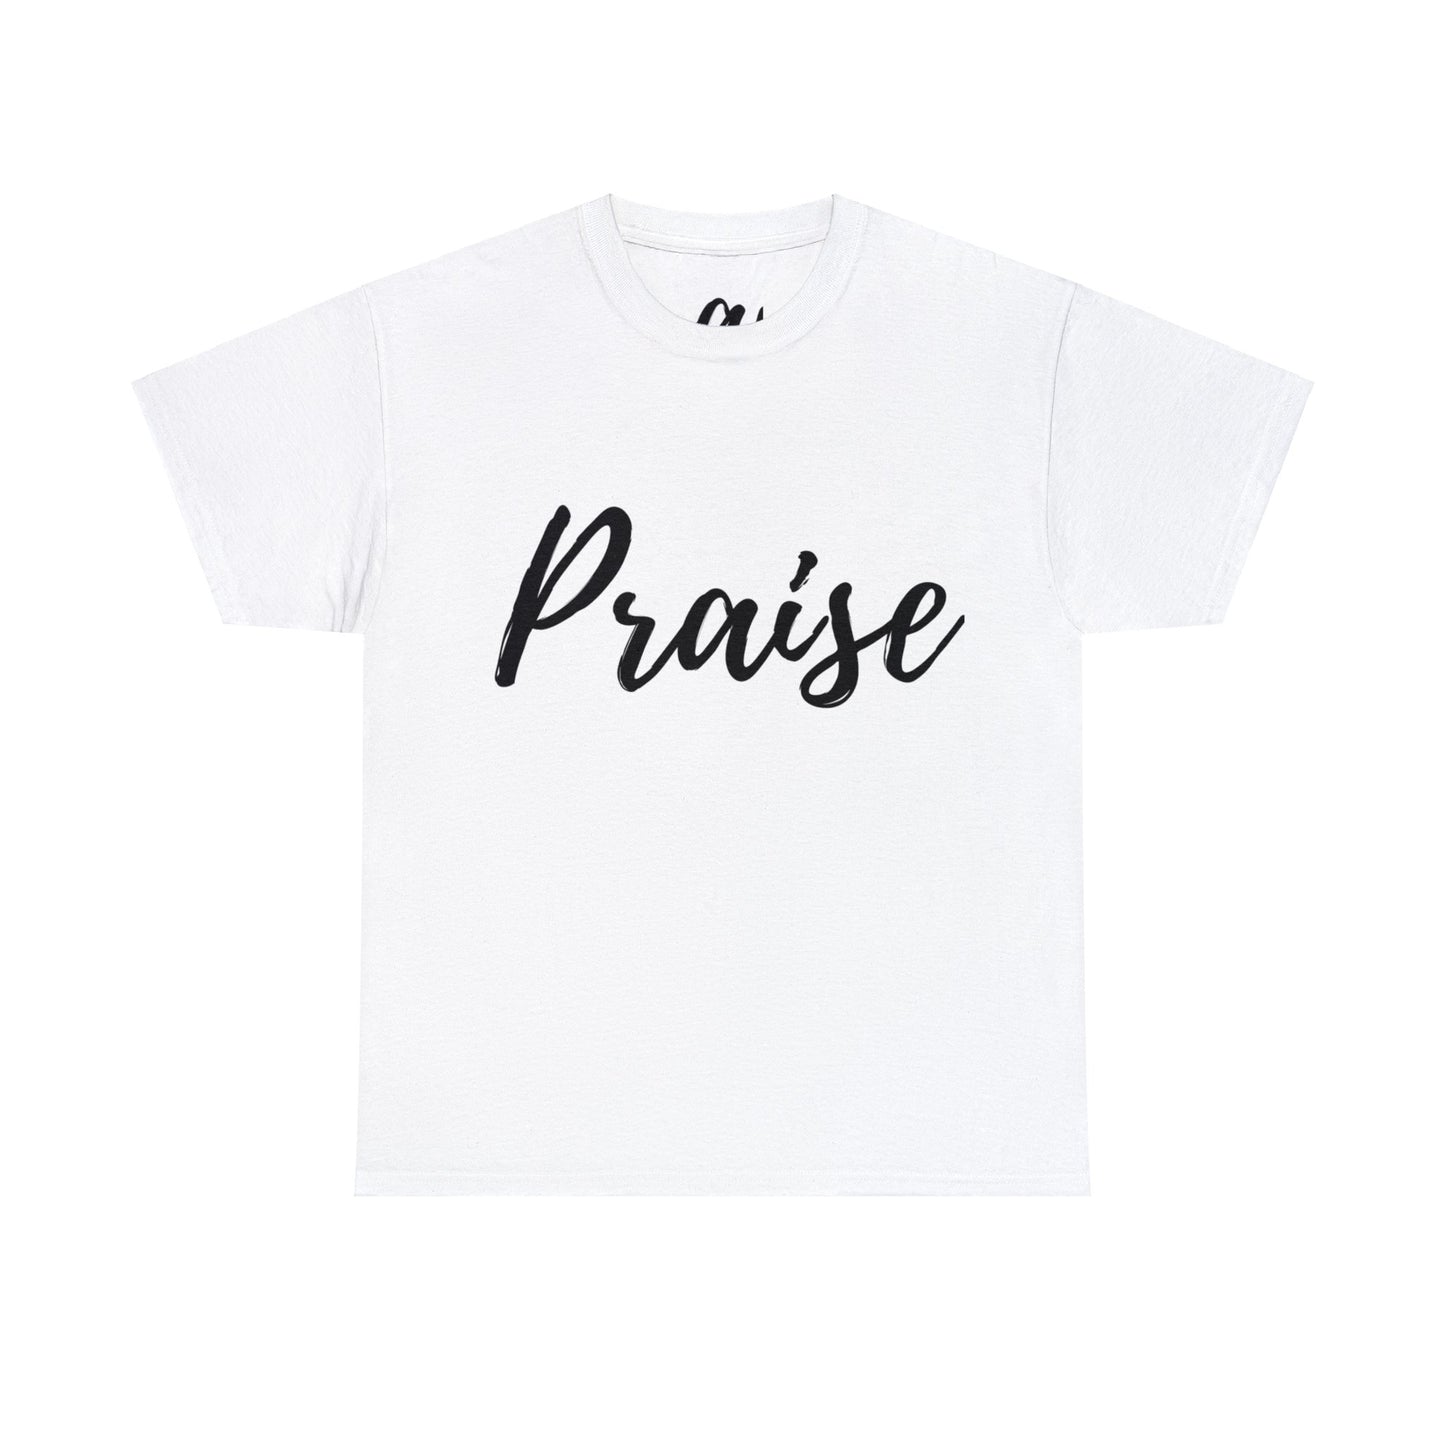 Praise T-Shirts